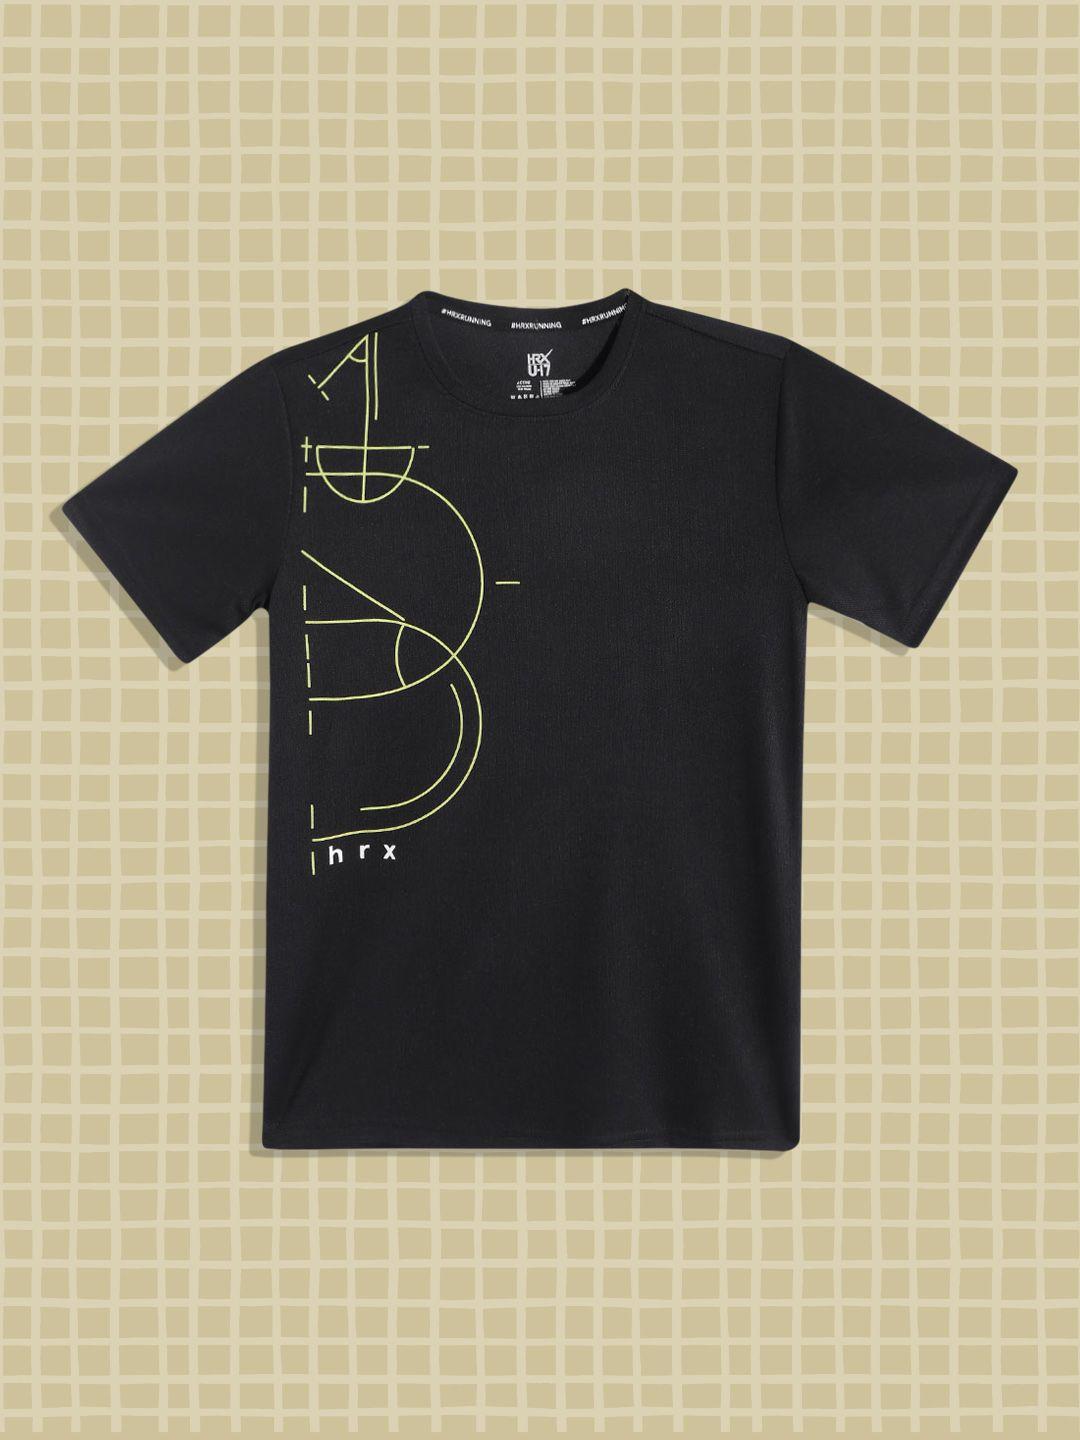 hrx by hrithik roshan running boys jet black rapid-dry typography tshirts